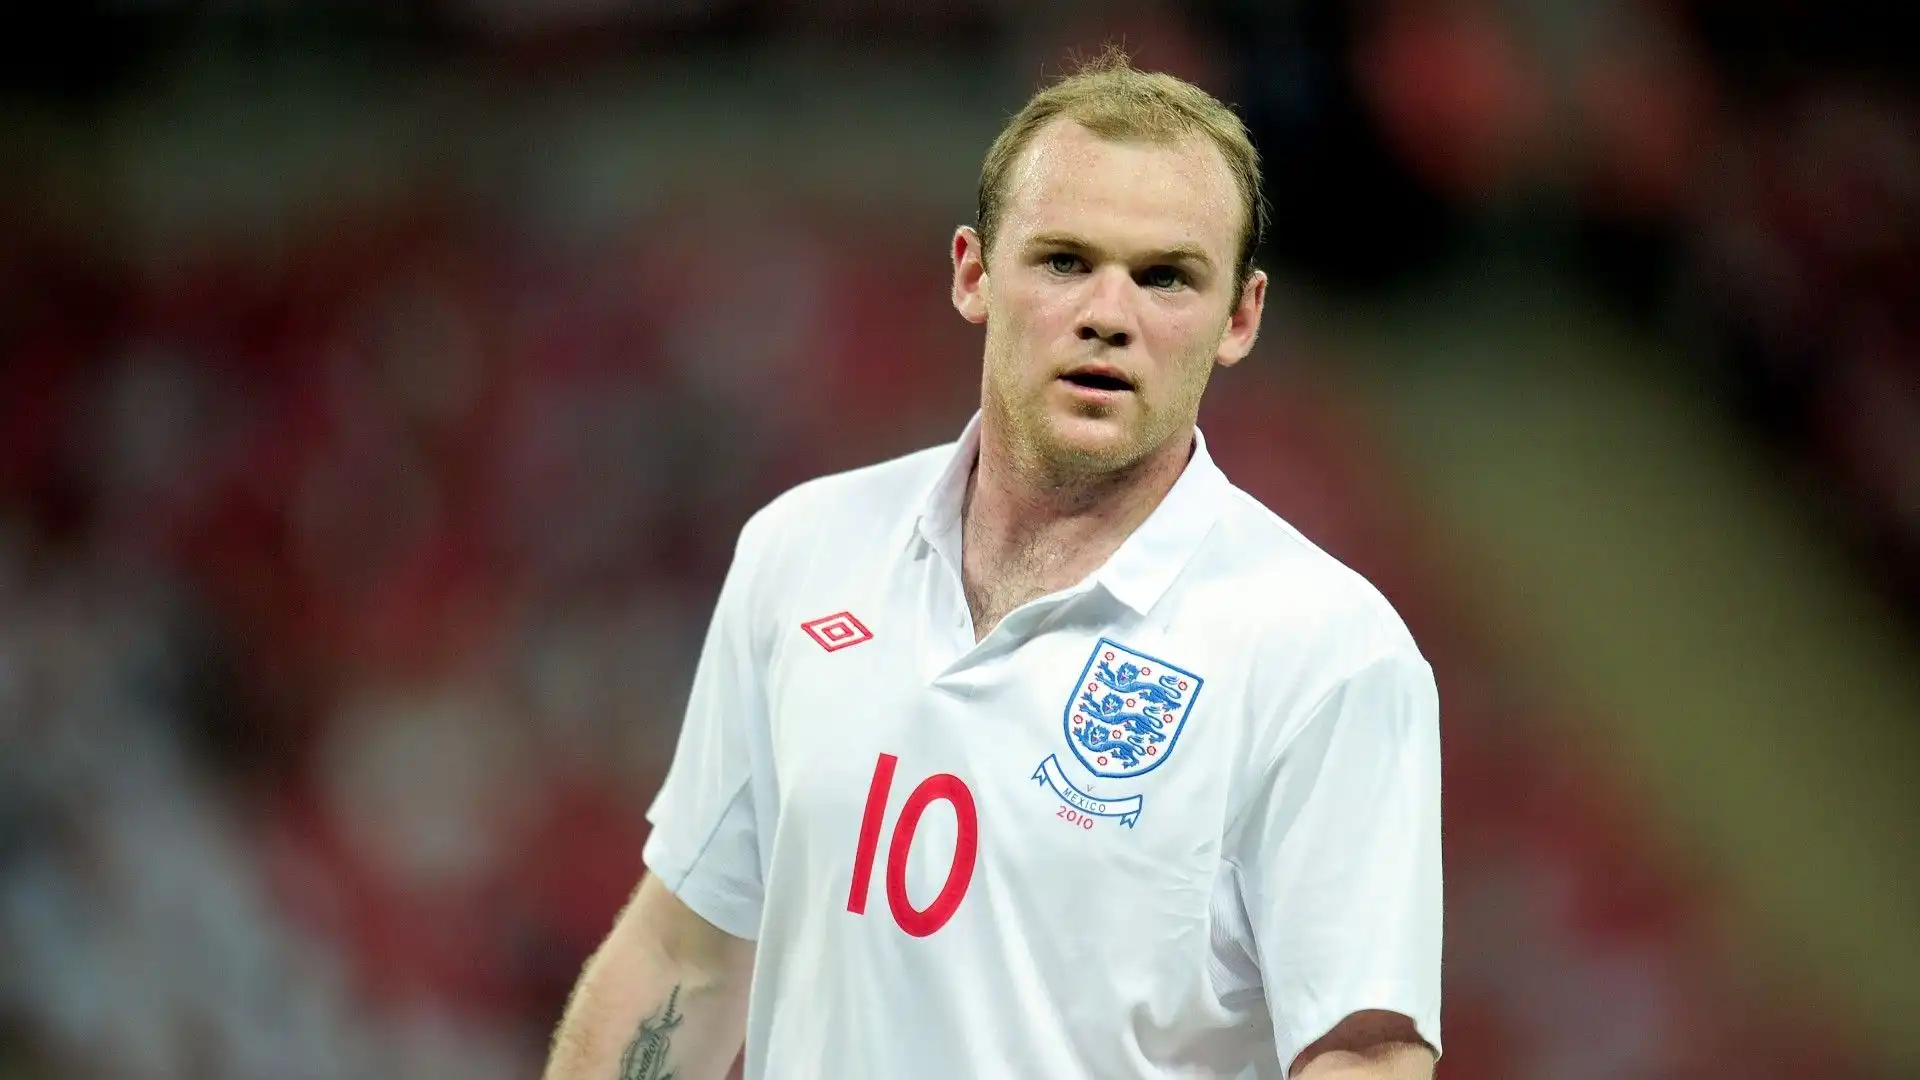 3- Wayne Rooney